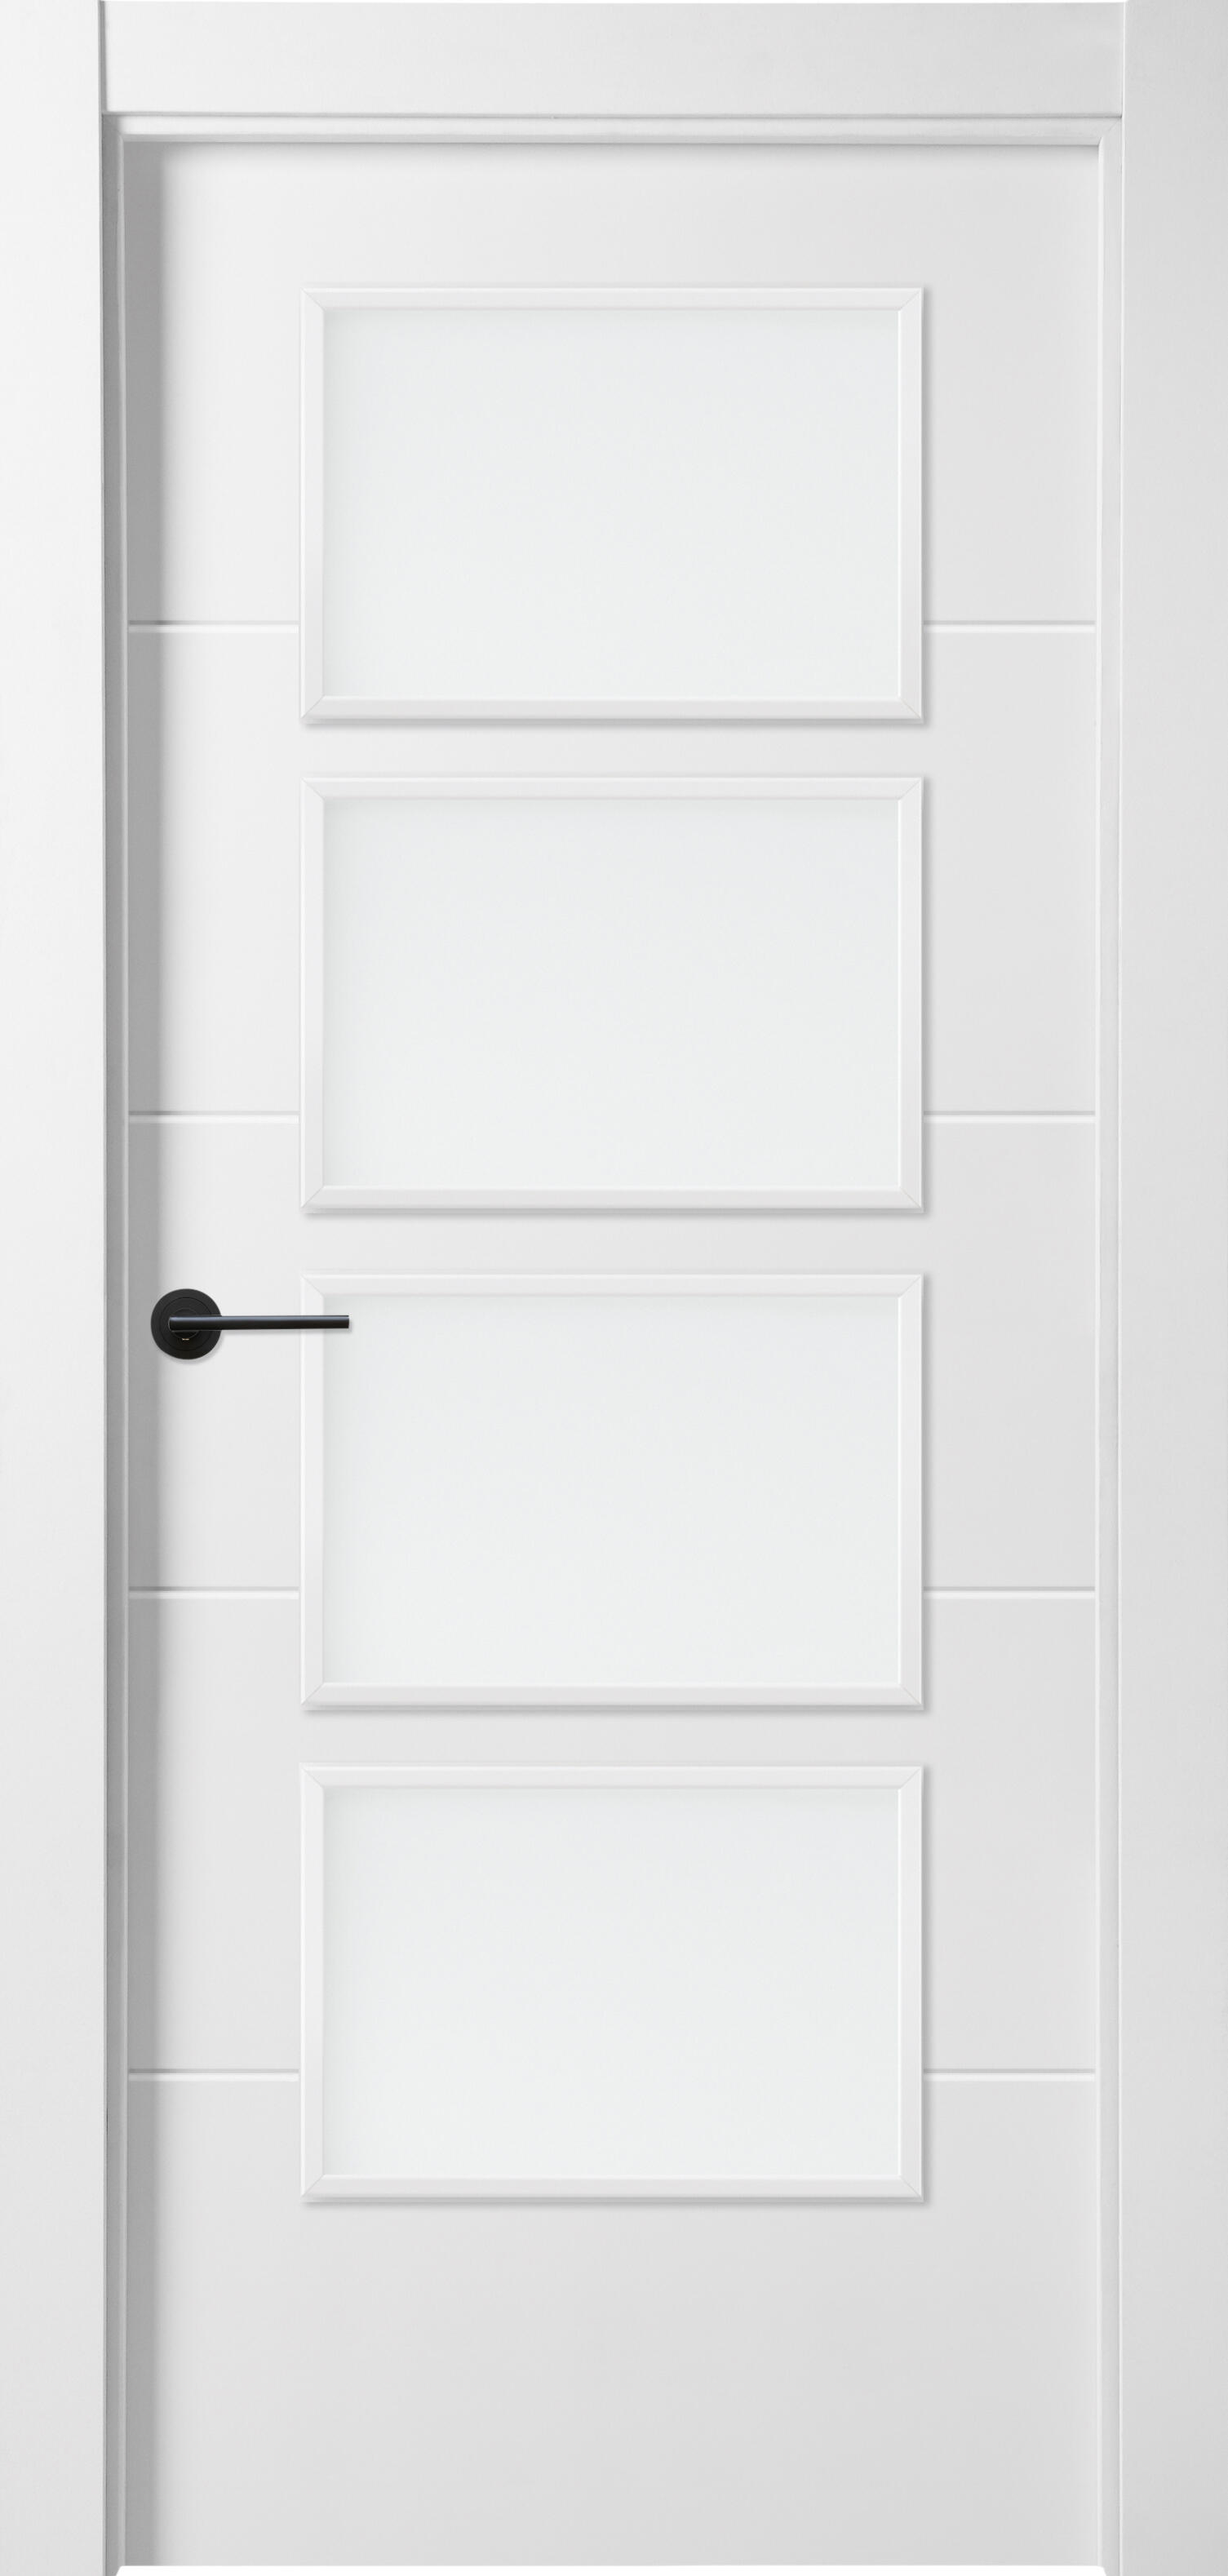 Puerta lucerna plus black blanco de apertura derecha con cristal de 11x72.5 cm